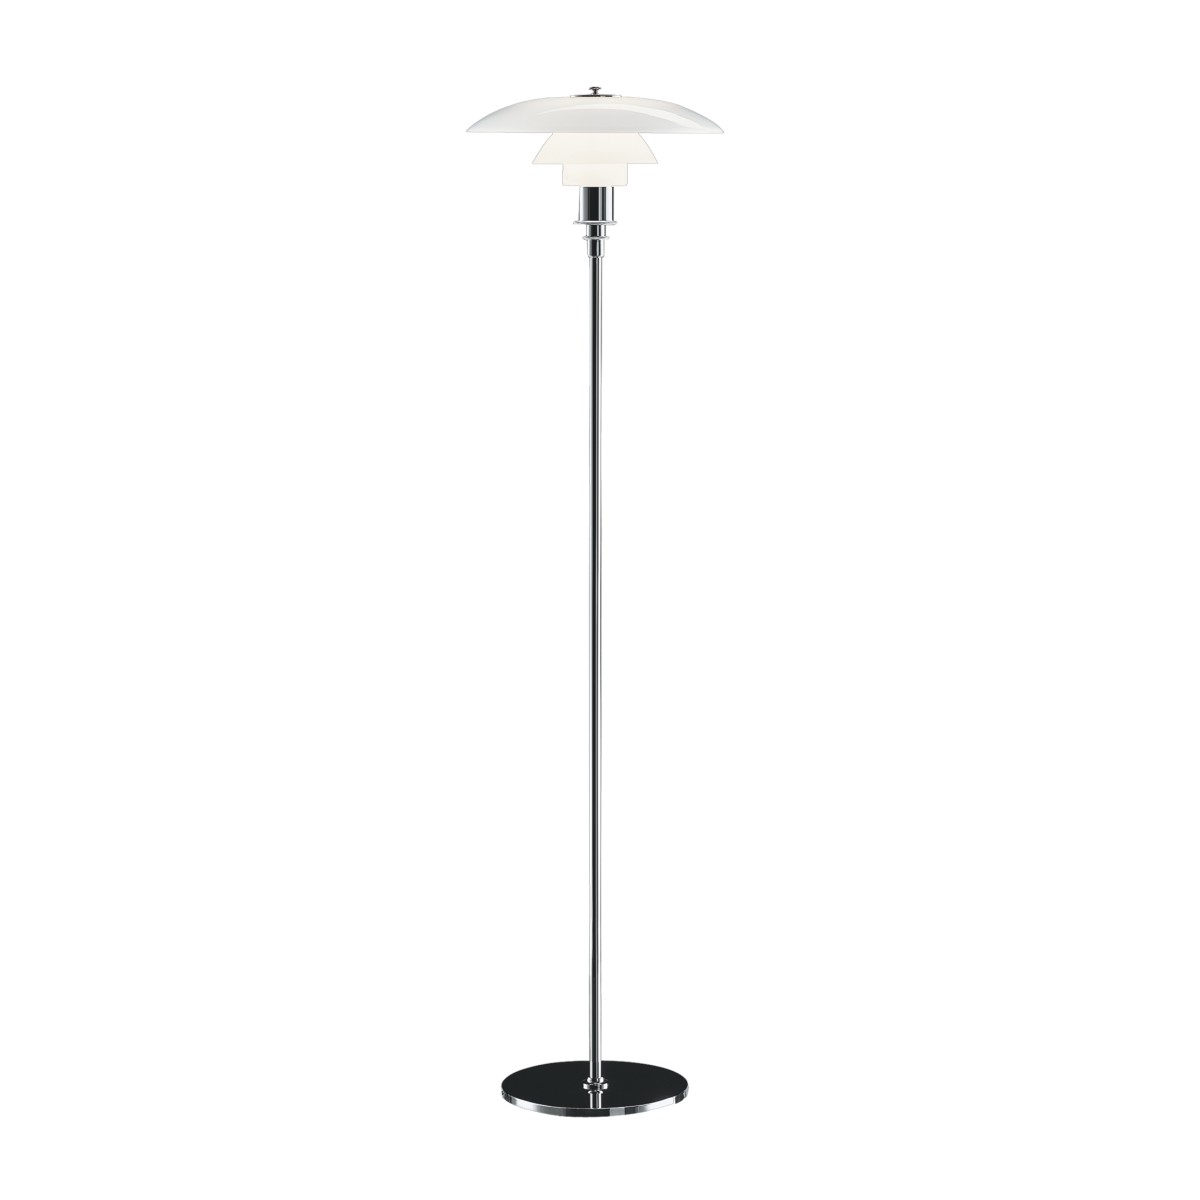 PH 3½-2½ Floor Lamp